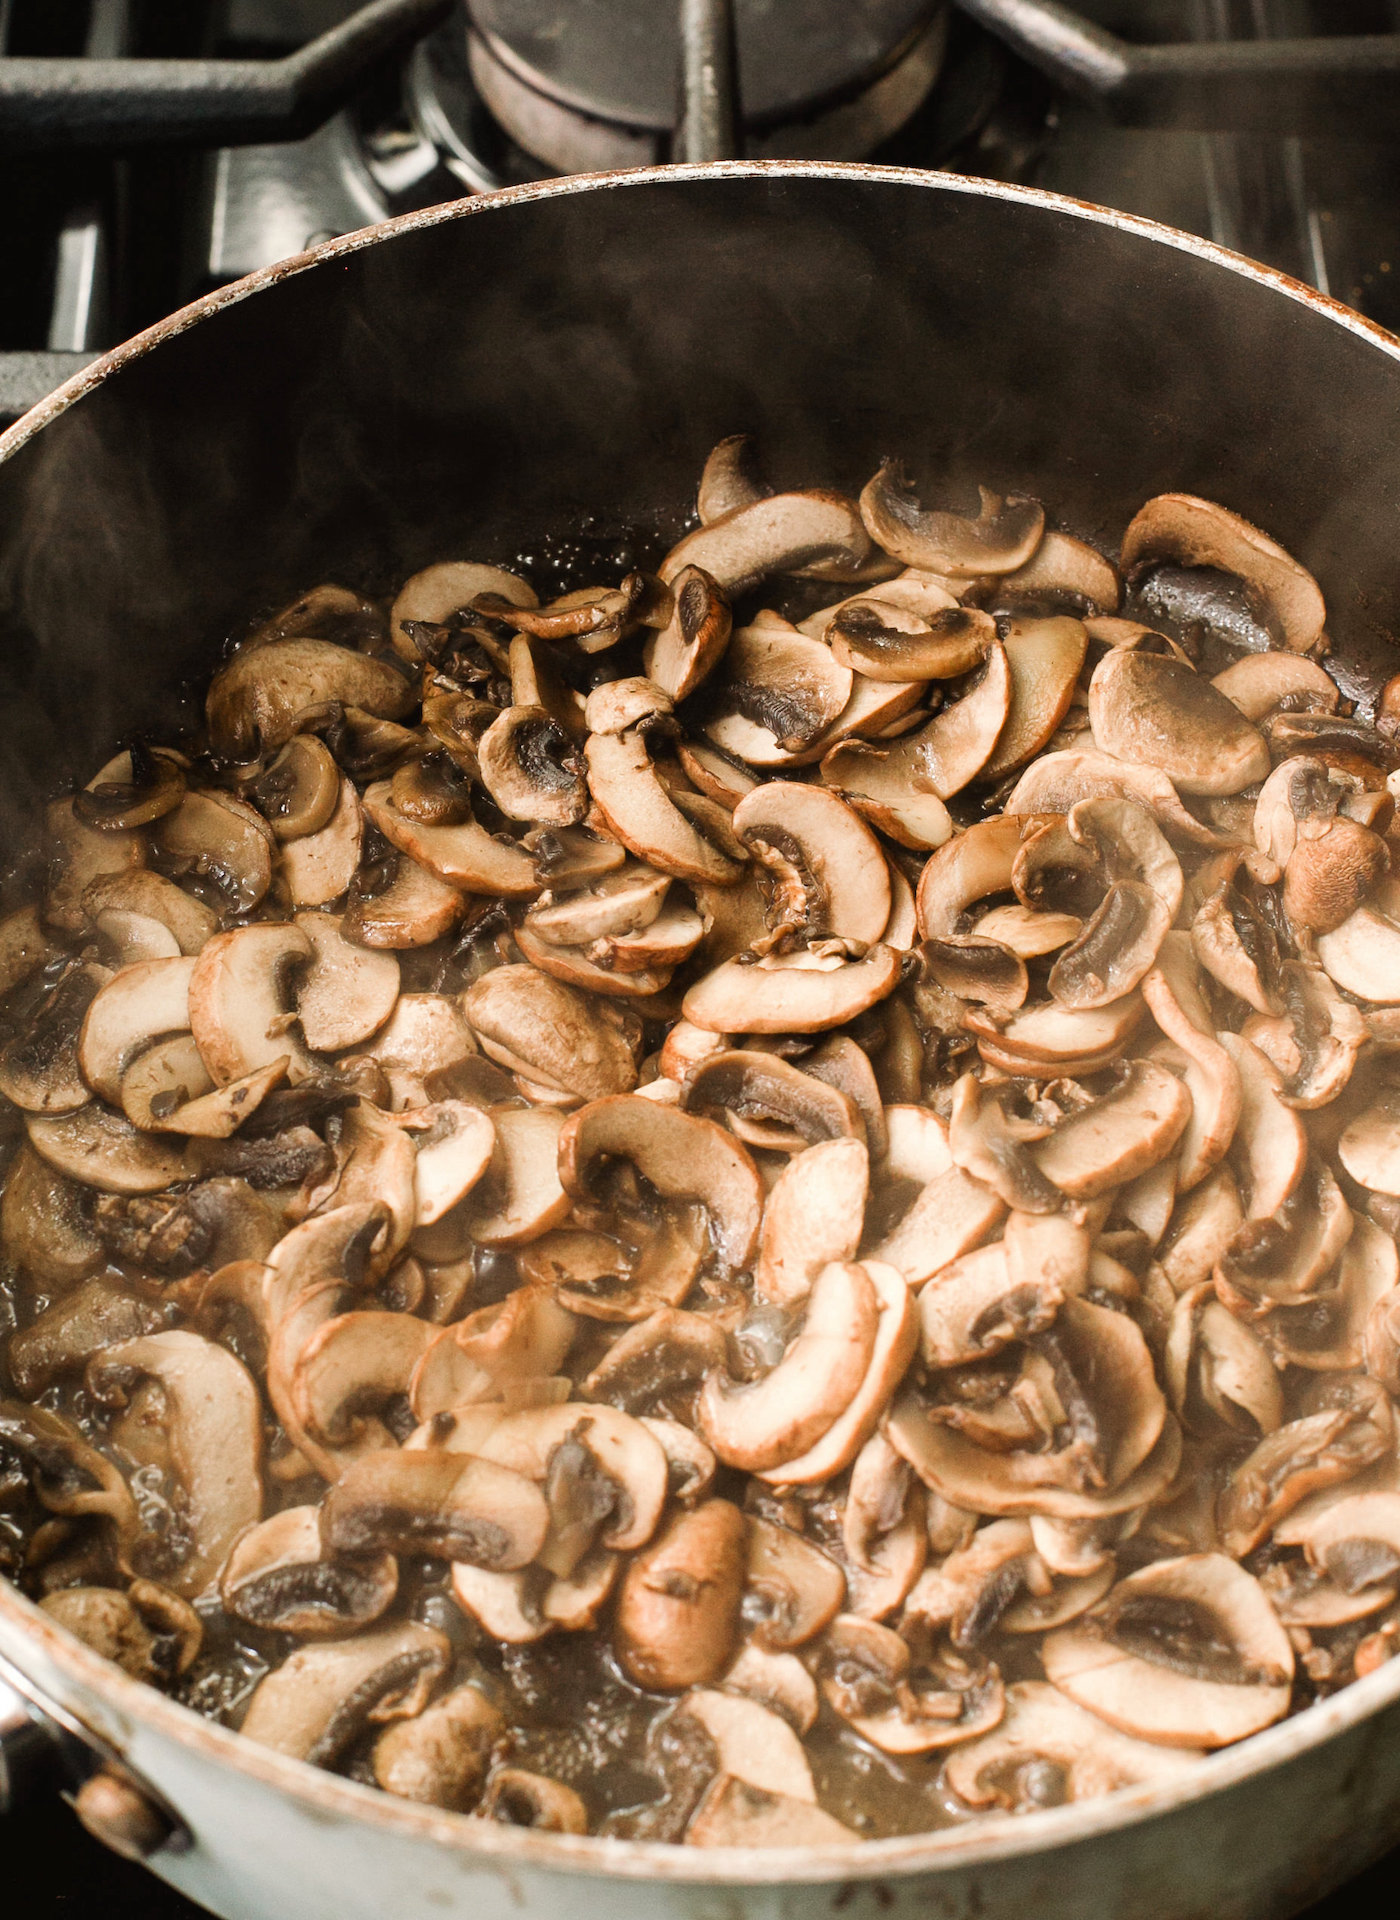 Mushrooms cooking in the pan